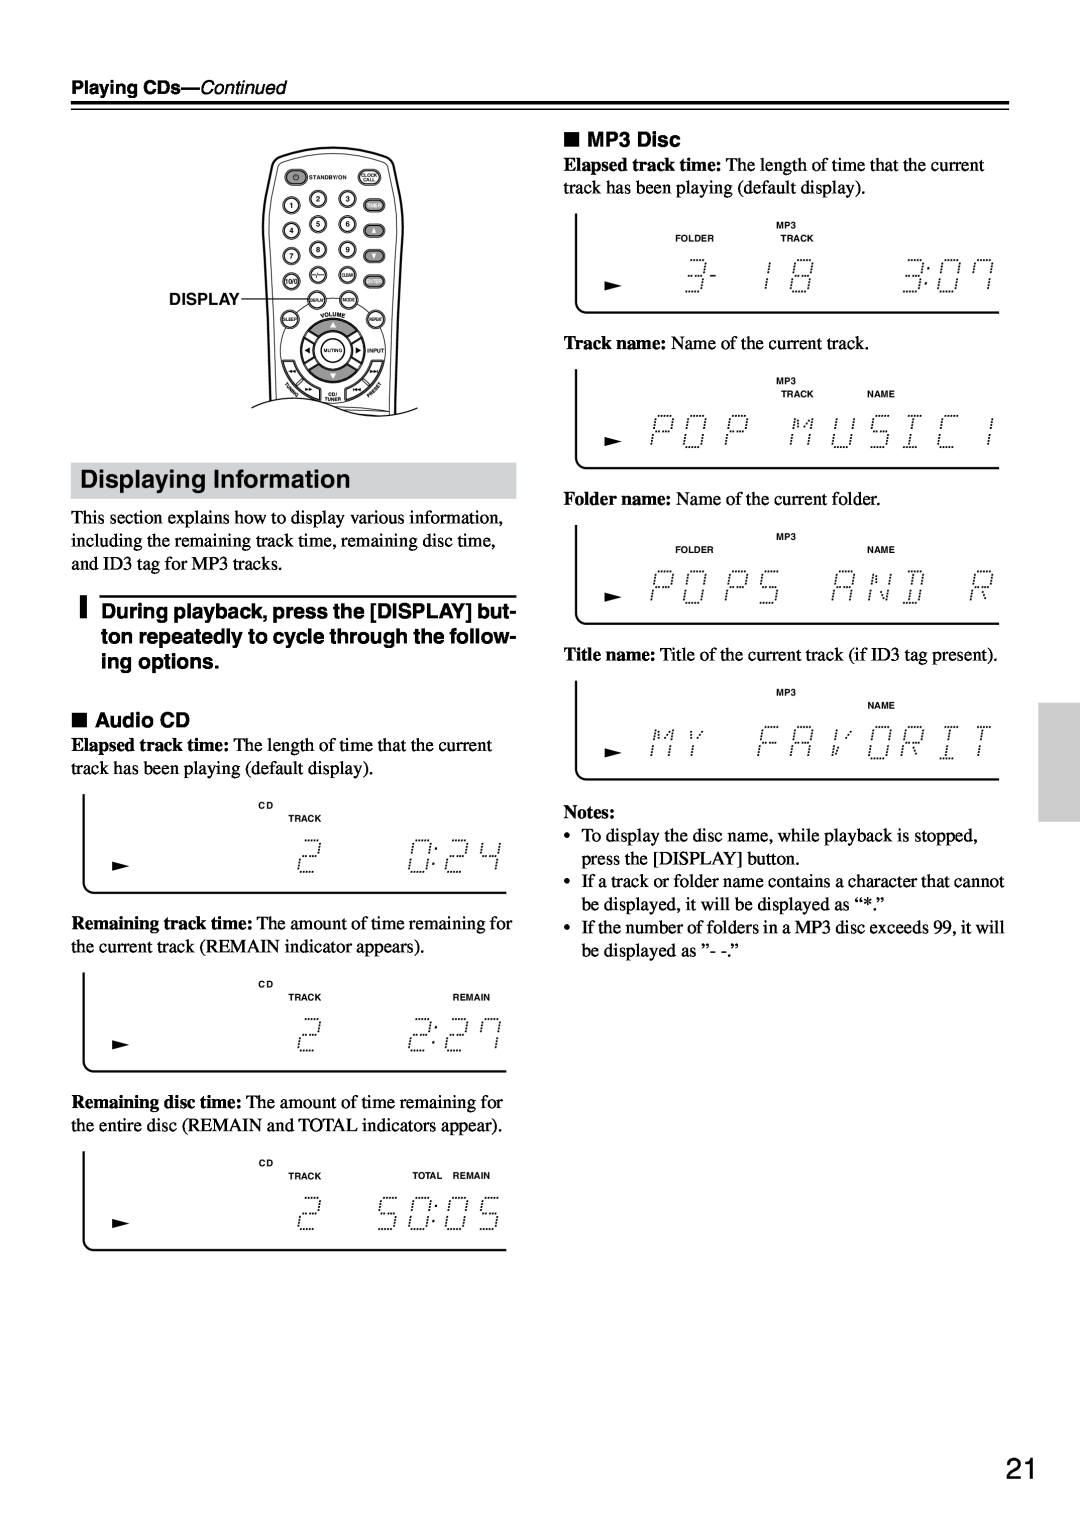 Onkyo CR-505 instruction manual Displaying Information, Audio CD, MP3 Disc 